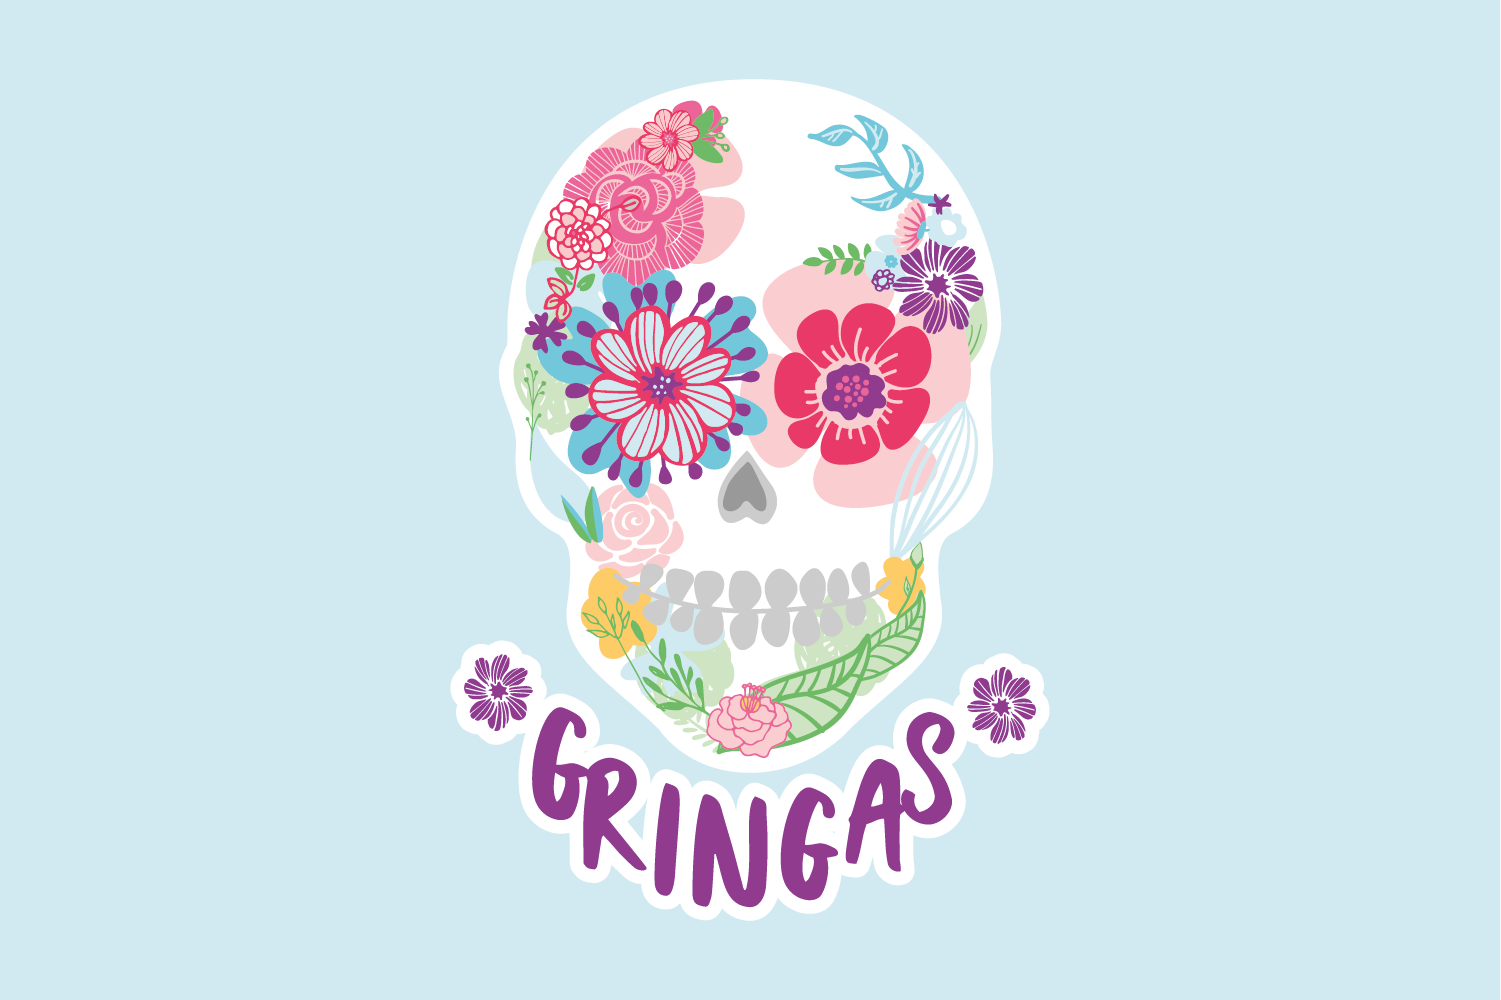 Gringas Logo Design